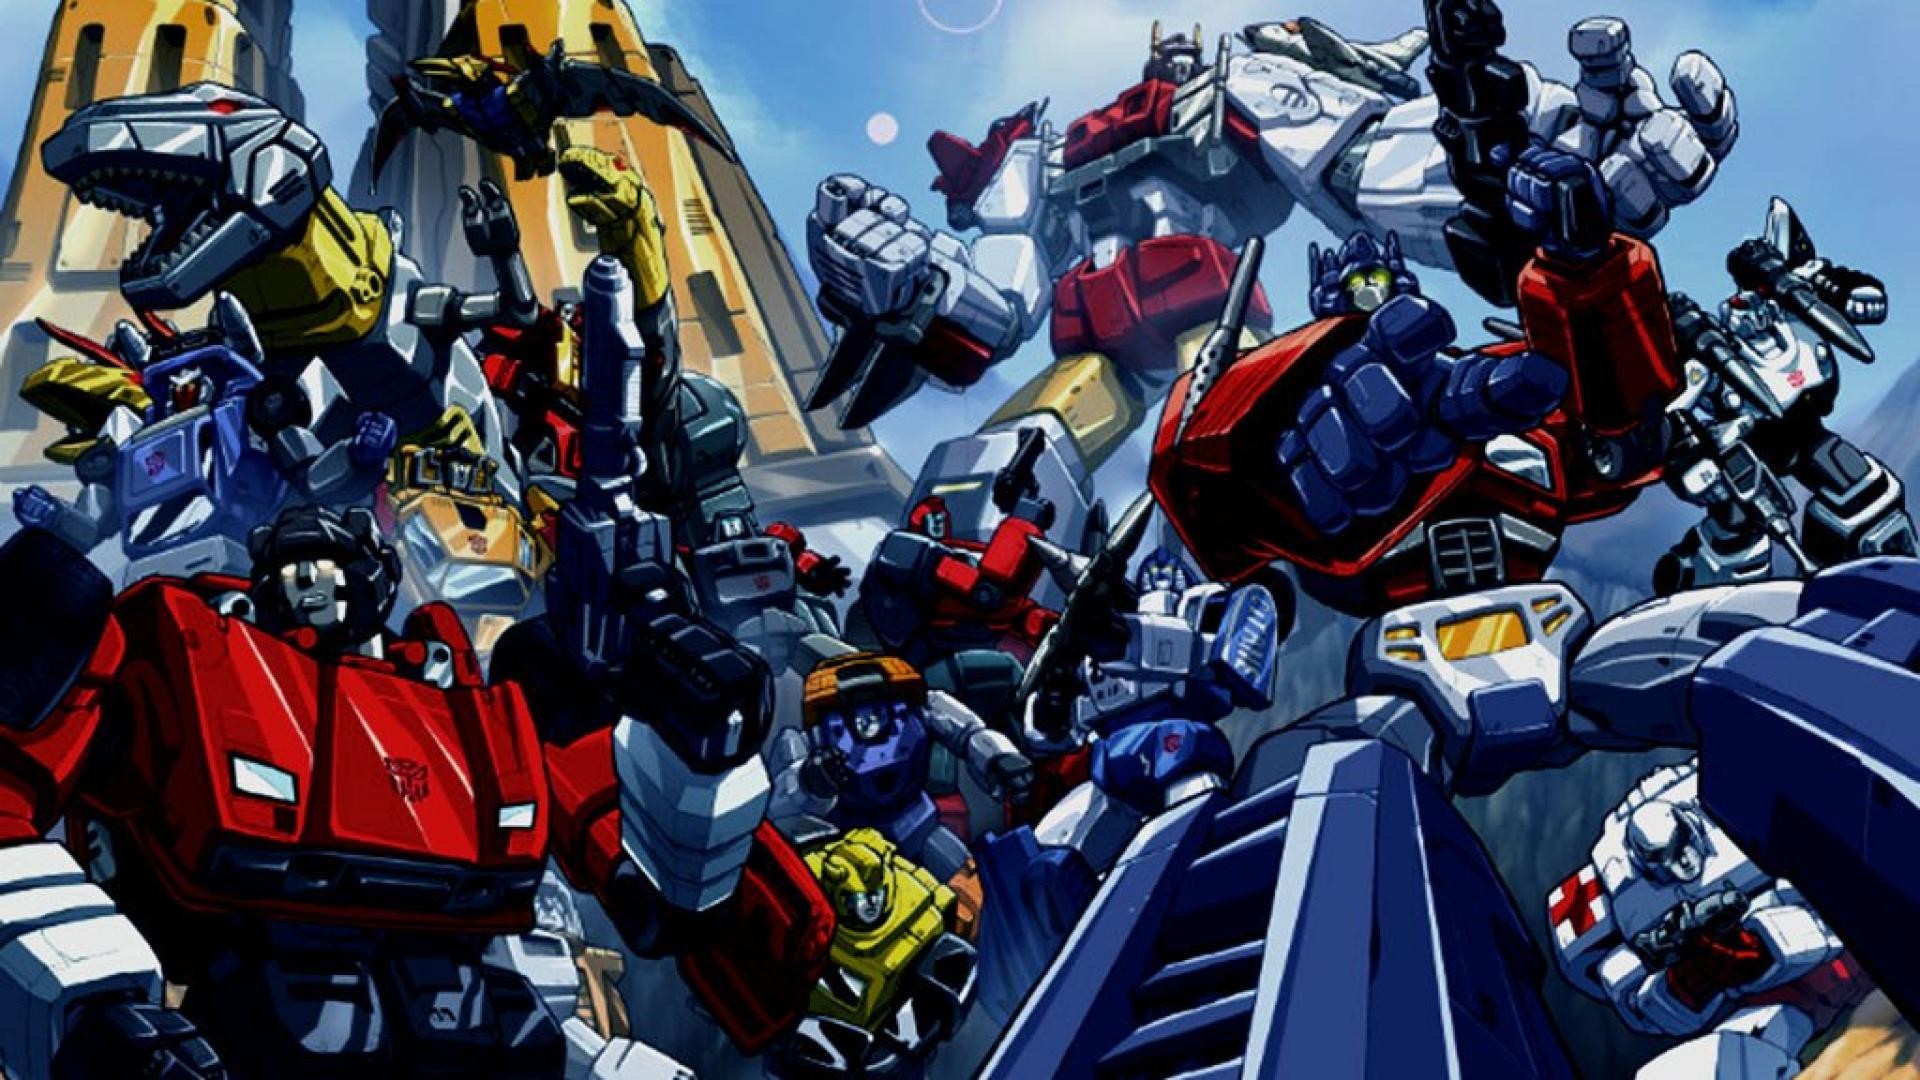 Transformers Cartoon Wallpapers